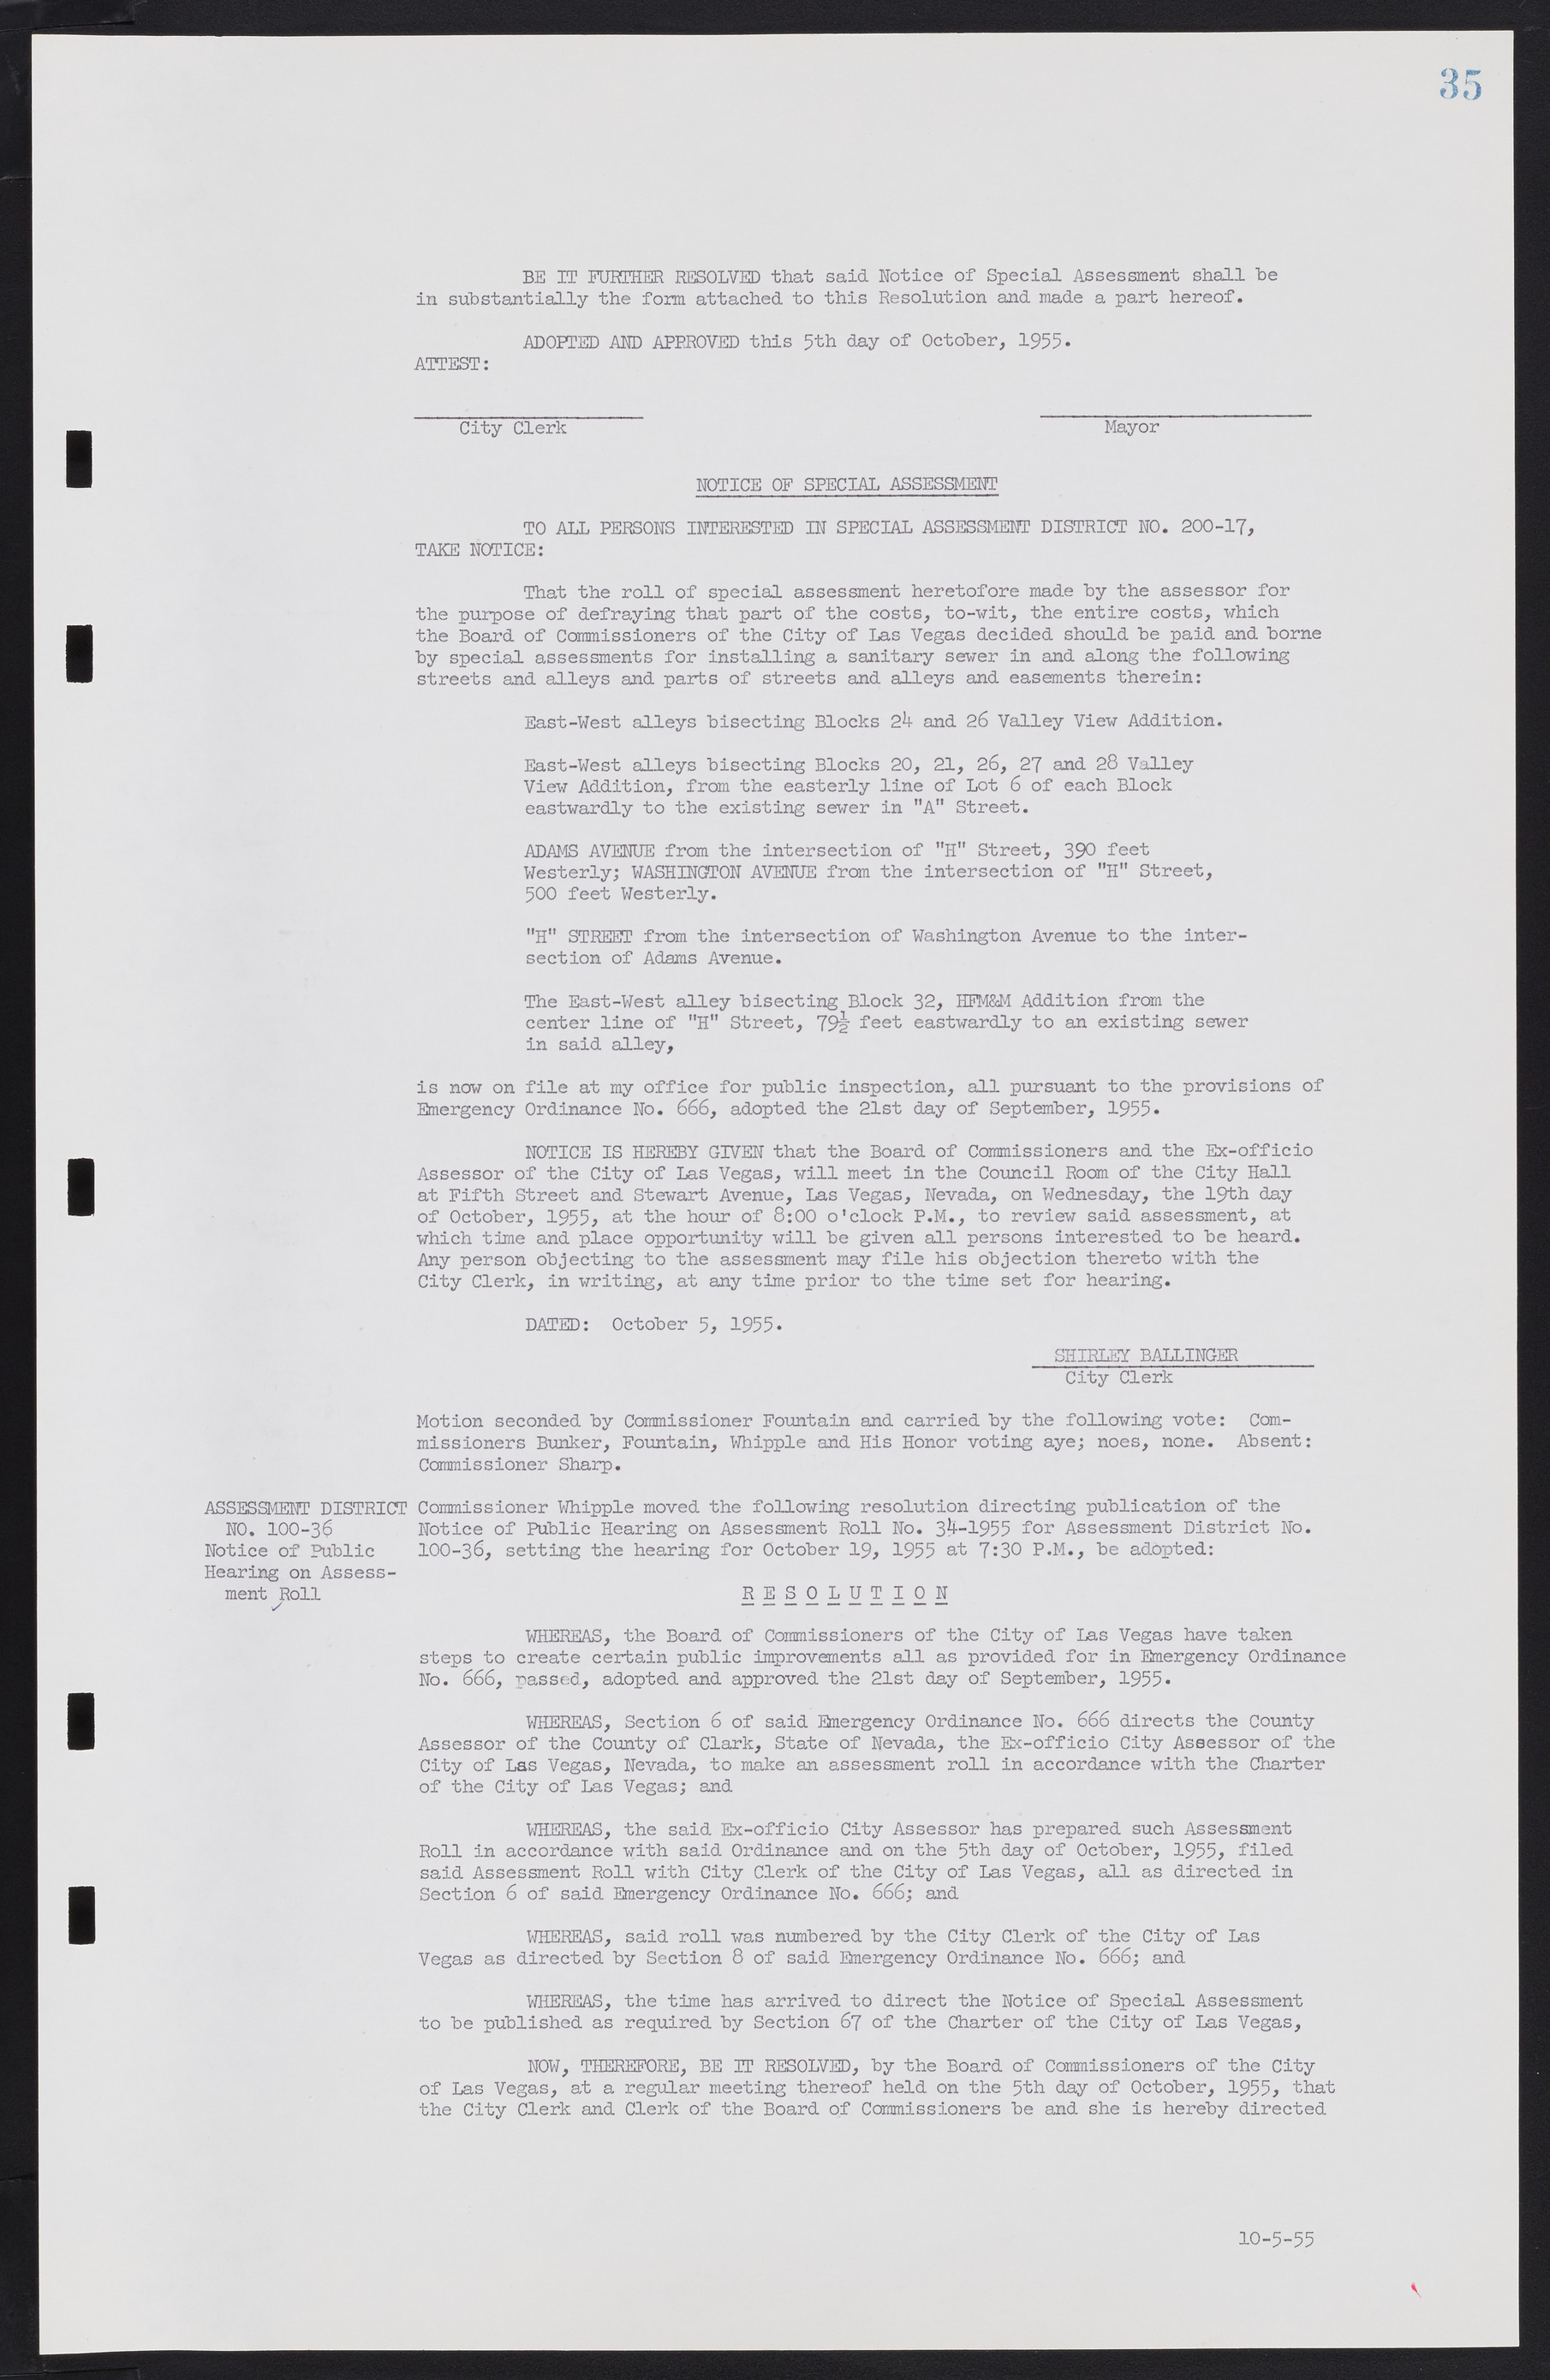 Las Vegas City Commission Minutes, September 21, 1955 to November 20, 1957, lvc000010-41